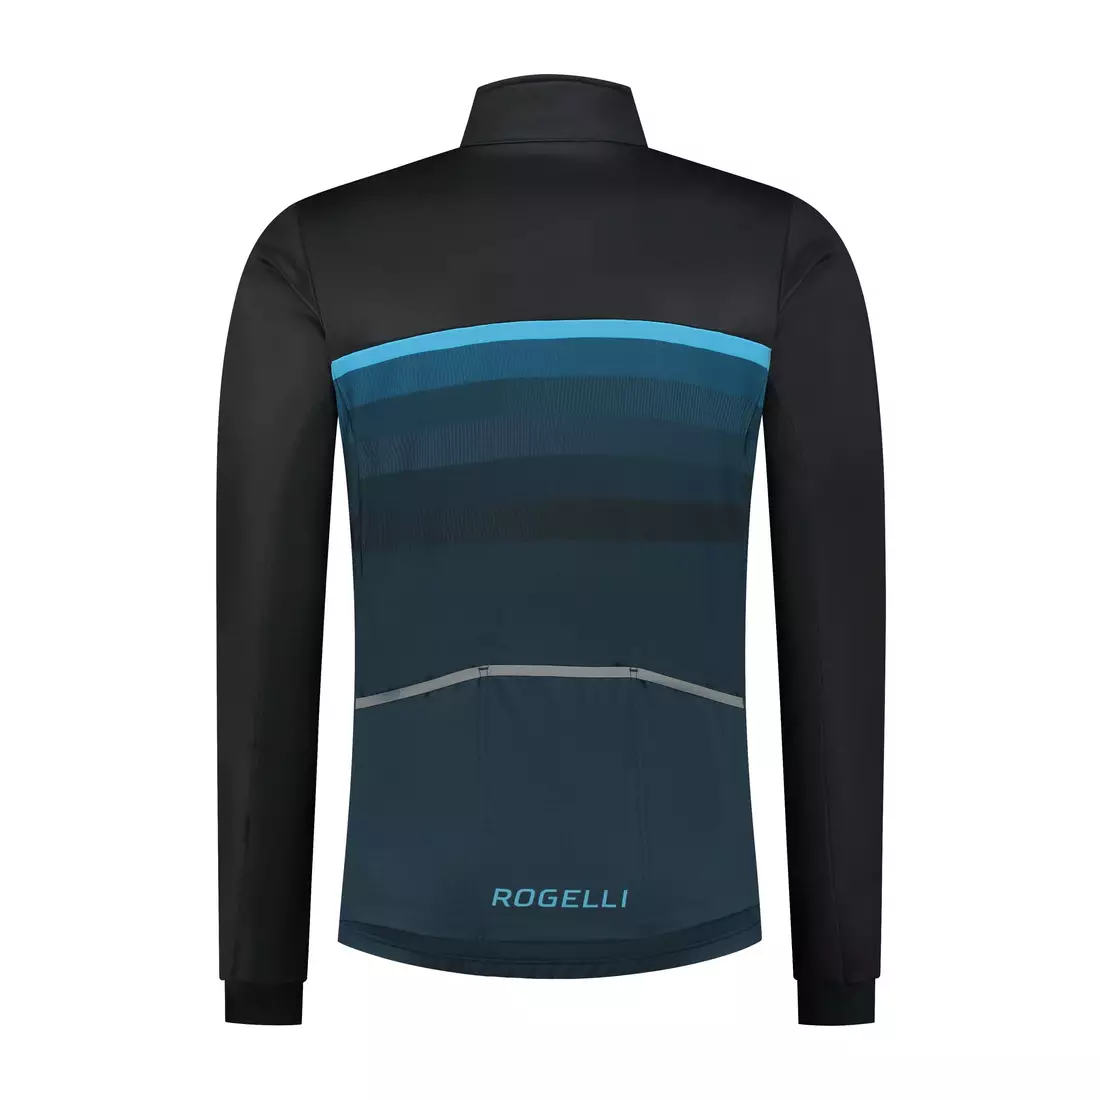 Rogelli Winter-Radjacke HERO II, schwarz und blau